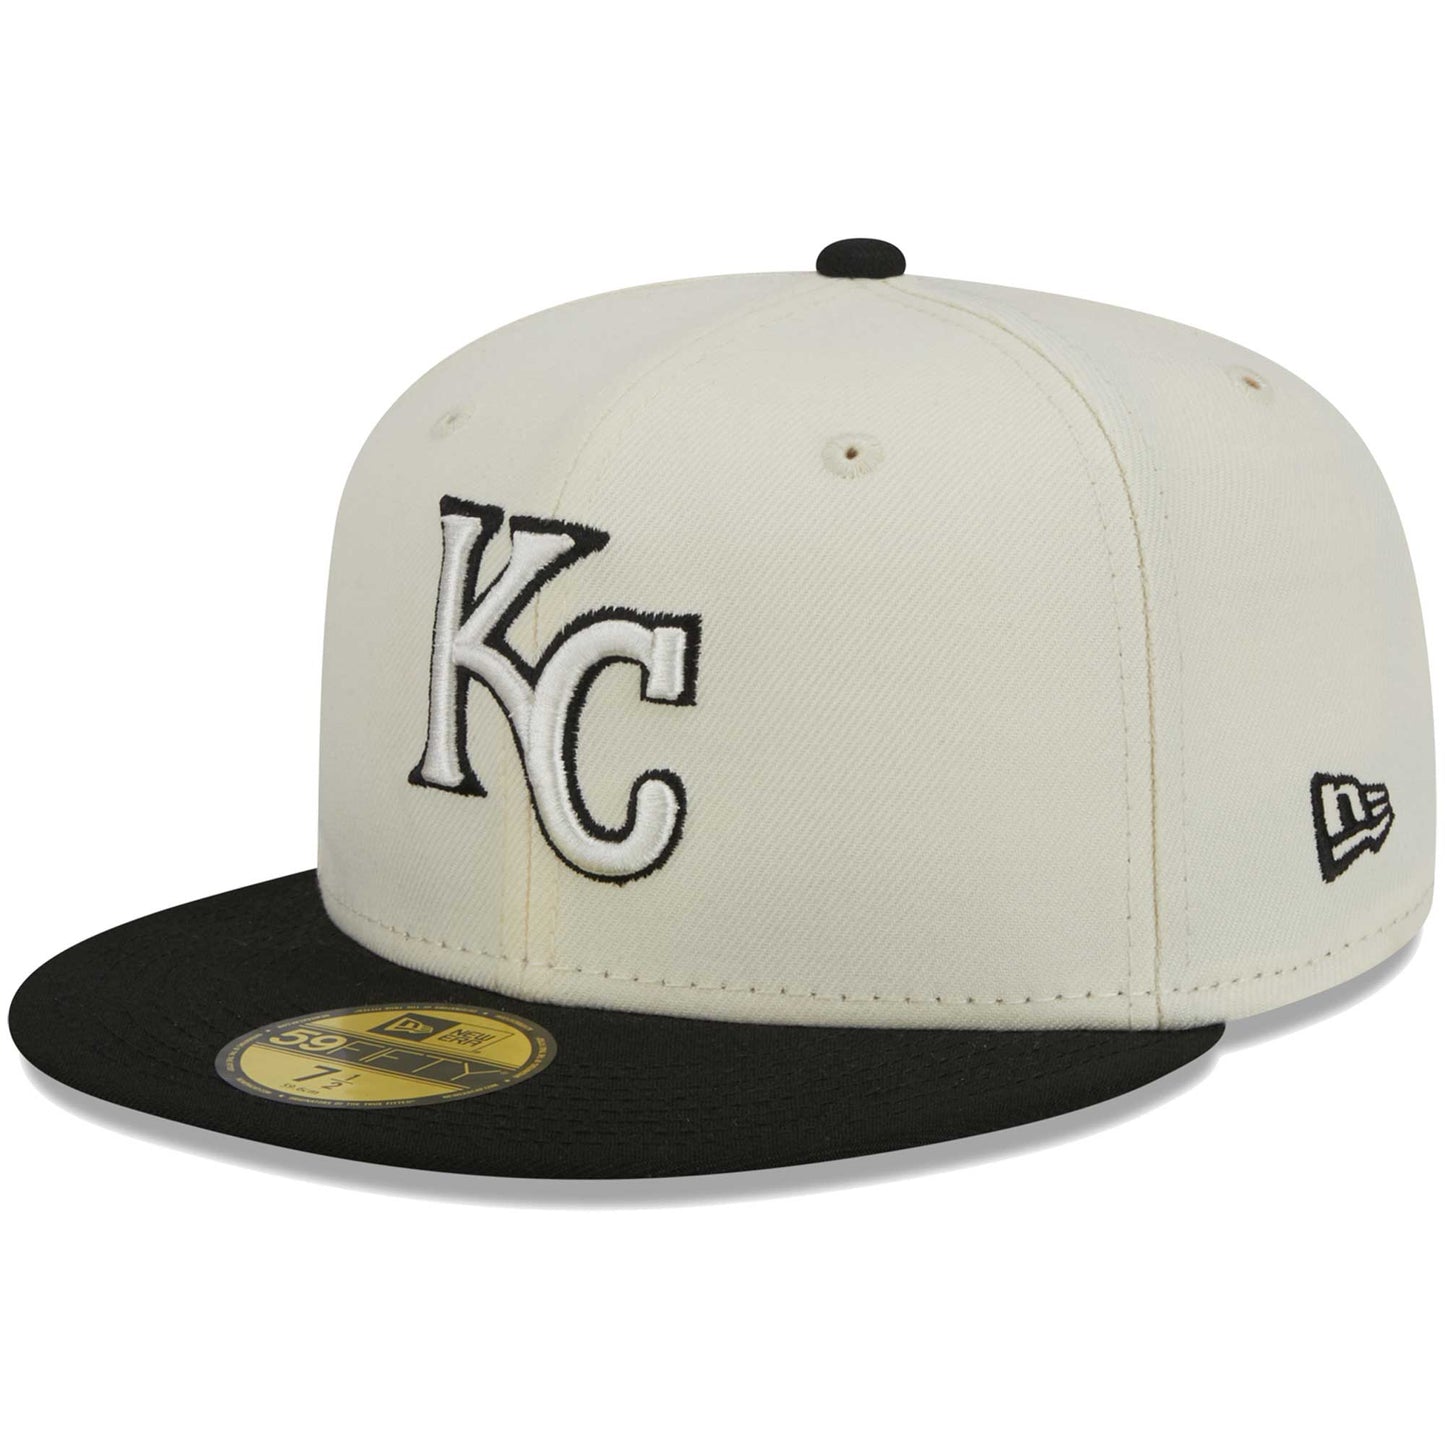 Kansas City Royals New Era Chrome 59FIFTY Fitted Hat - Stone/Black